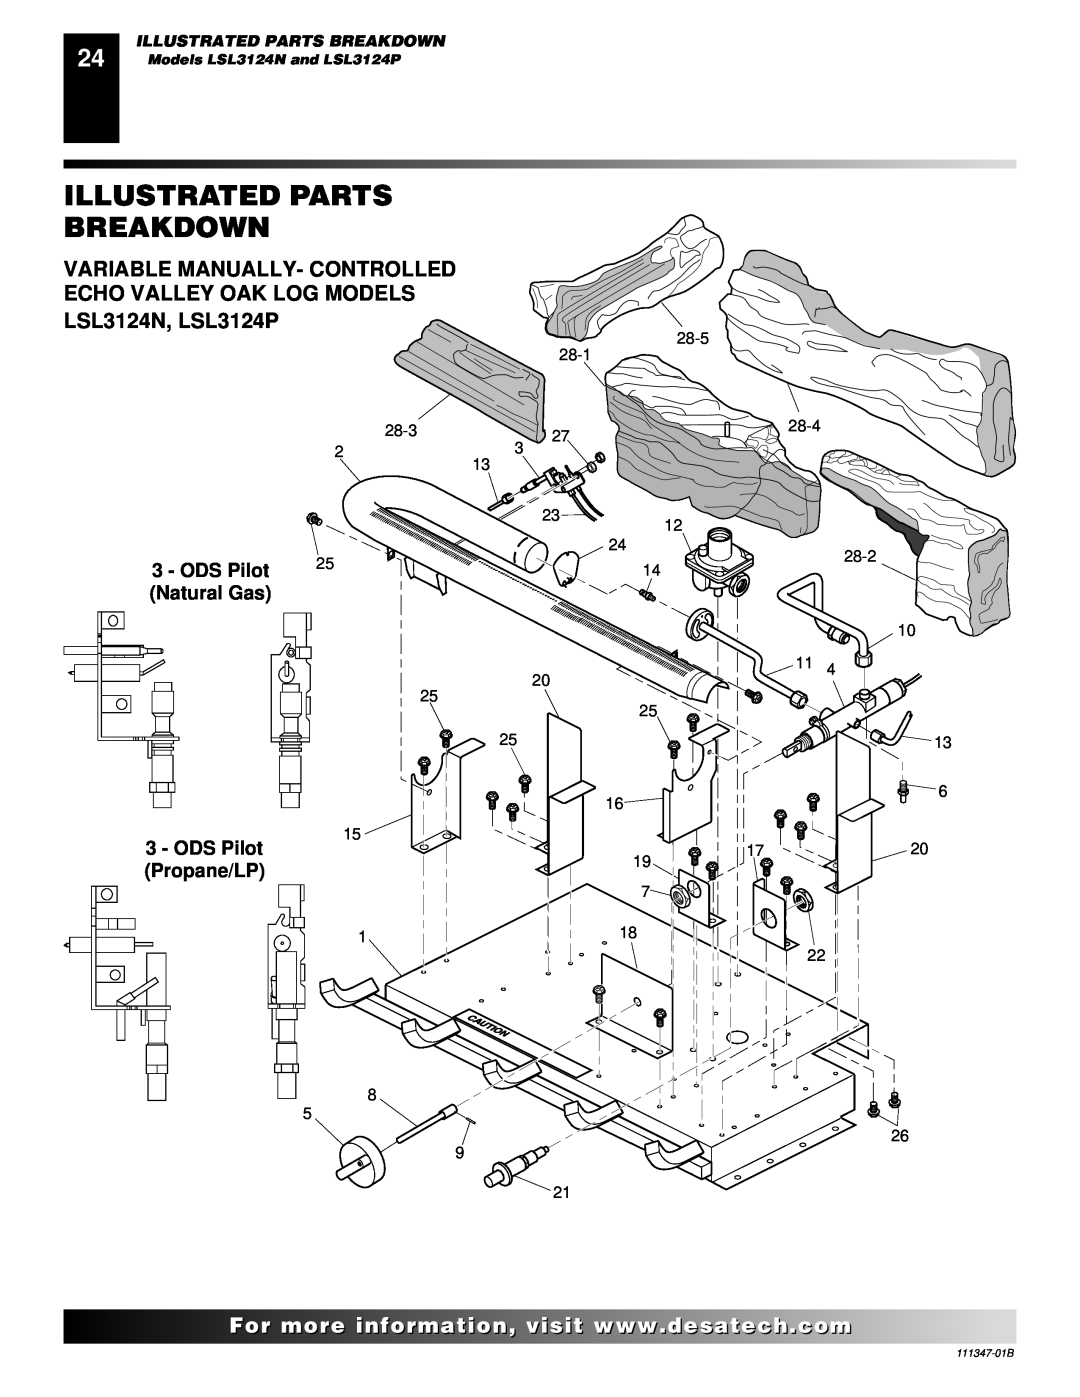 Desa Illustrated Parts Breakdown, Variable Manually- Controlled, ECHO VALLEY OAK LOG MODELS LSL3124N, LSL3124P 